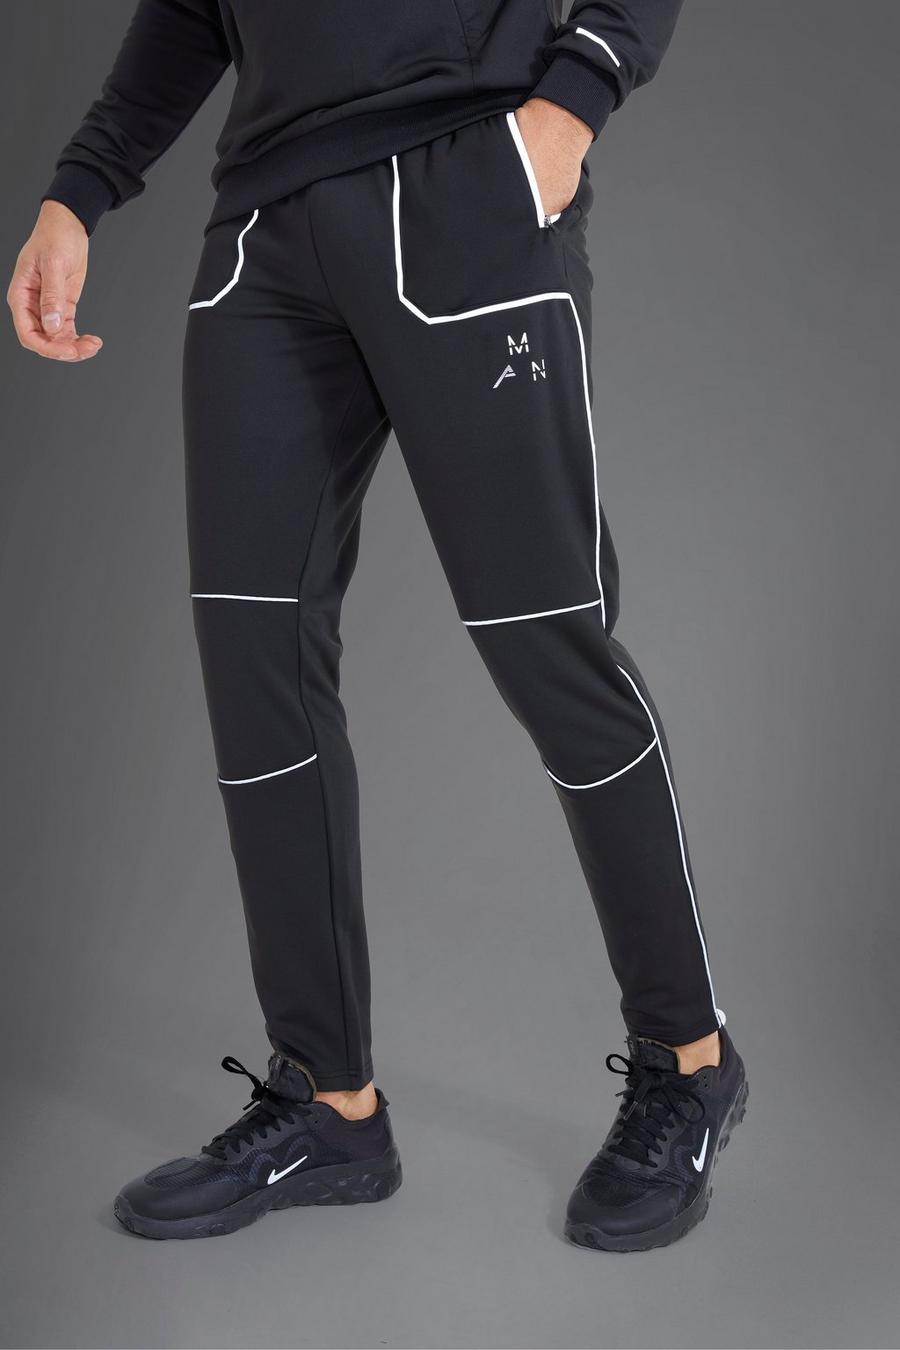 Pantaloni tuta Man Active Gym per alta performance riflettenti, Black negro